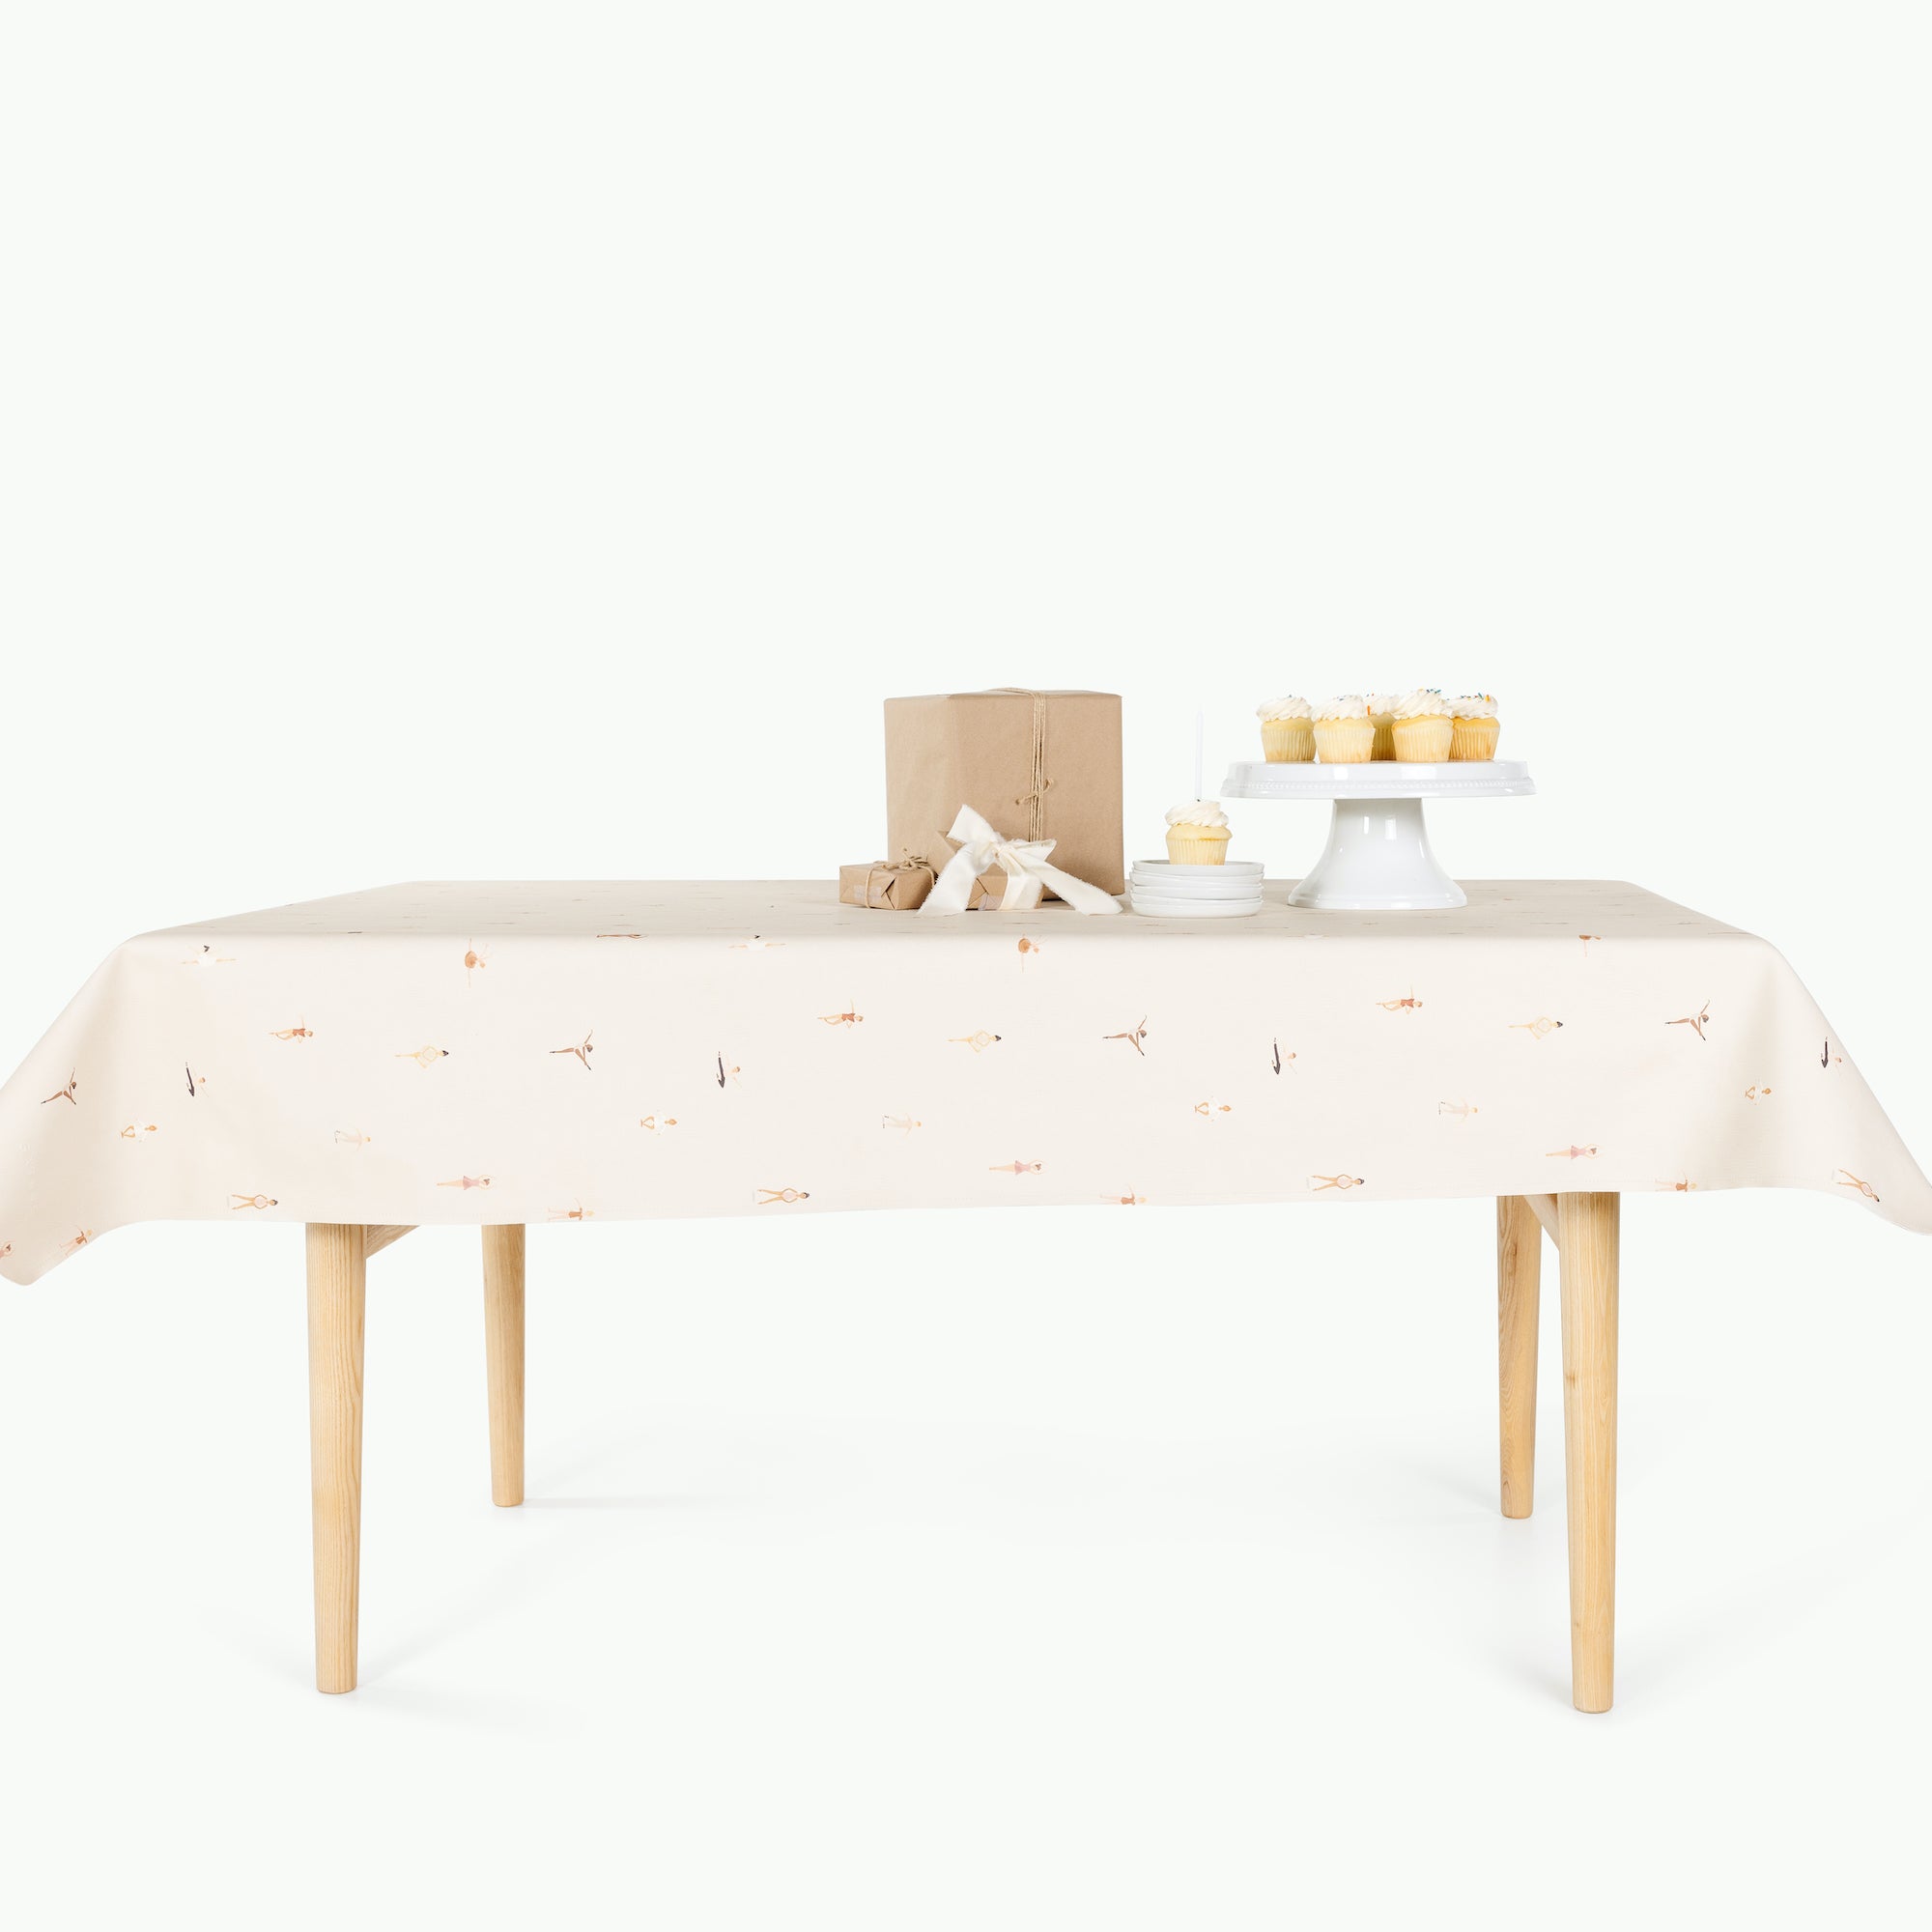 Petite Dancer / 8 Foot@petite dancer tablecloth on table 